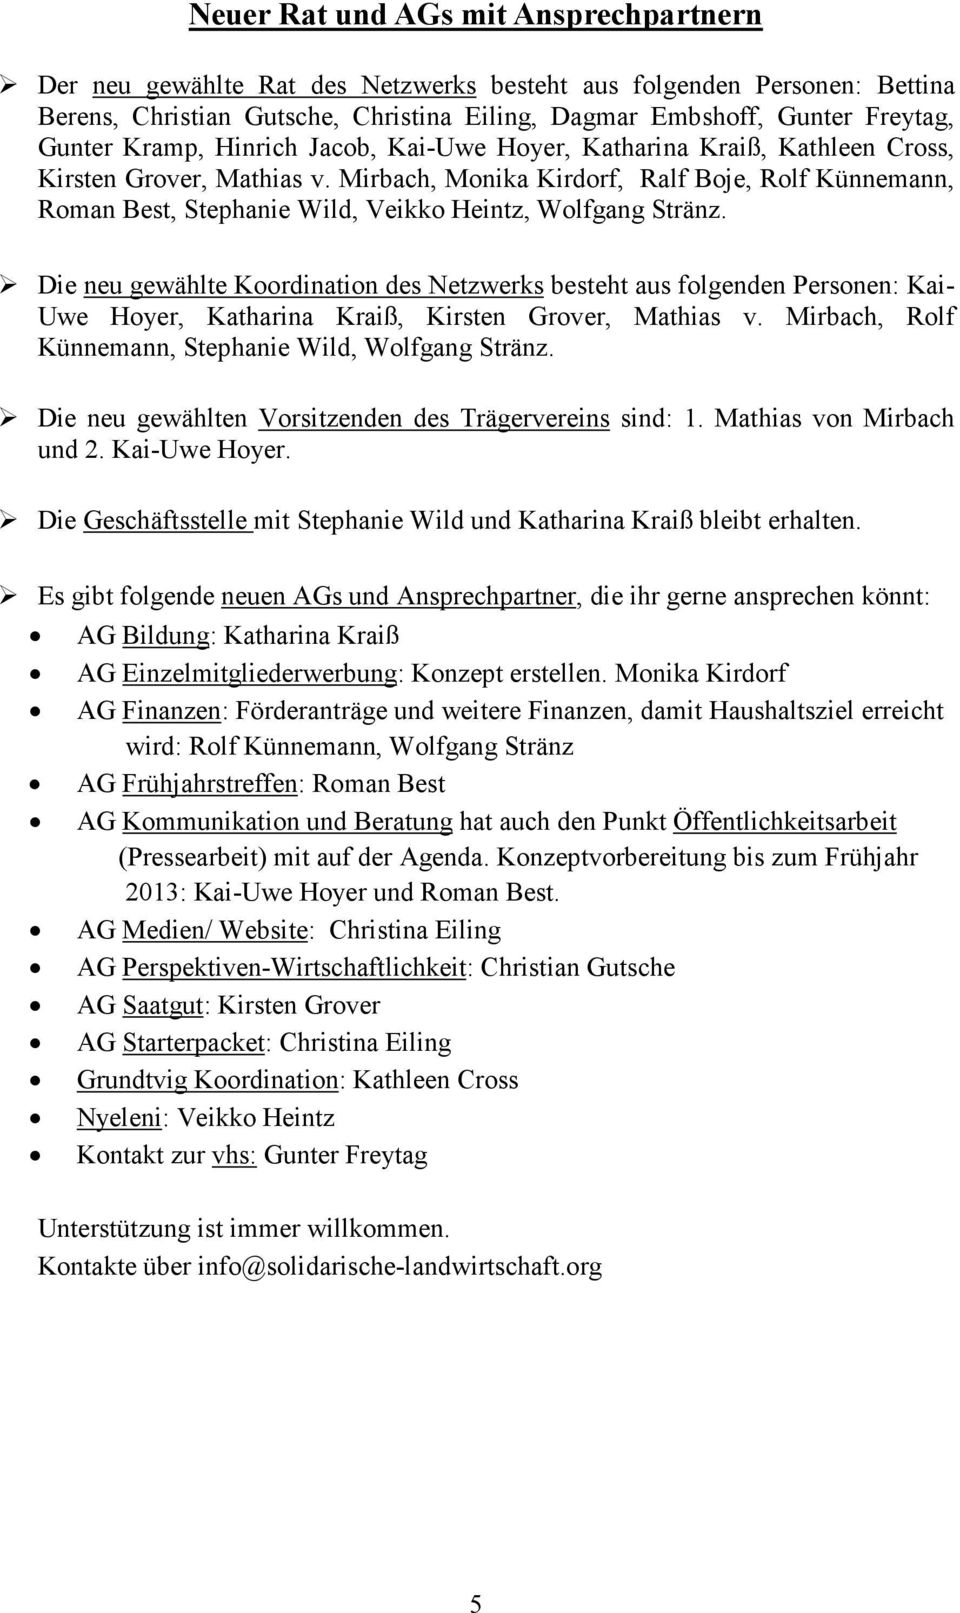 Mirbach, Monika Kirdorf, Ralf Boje, Rolf Künnemann, Roman Best, Stephanie Wild, Veikko Heintz, Wolfgang Stränz.